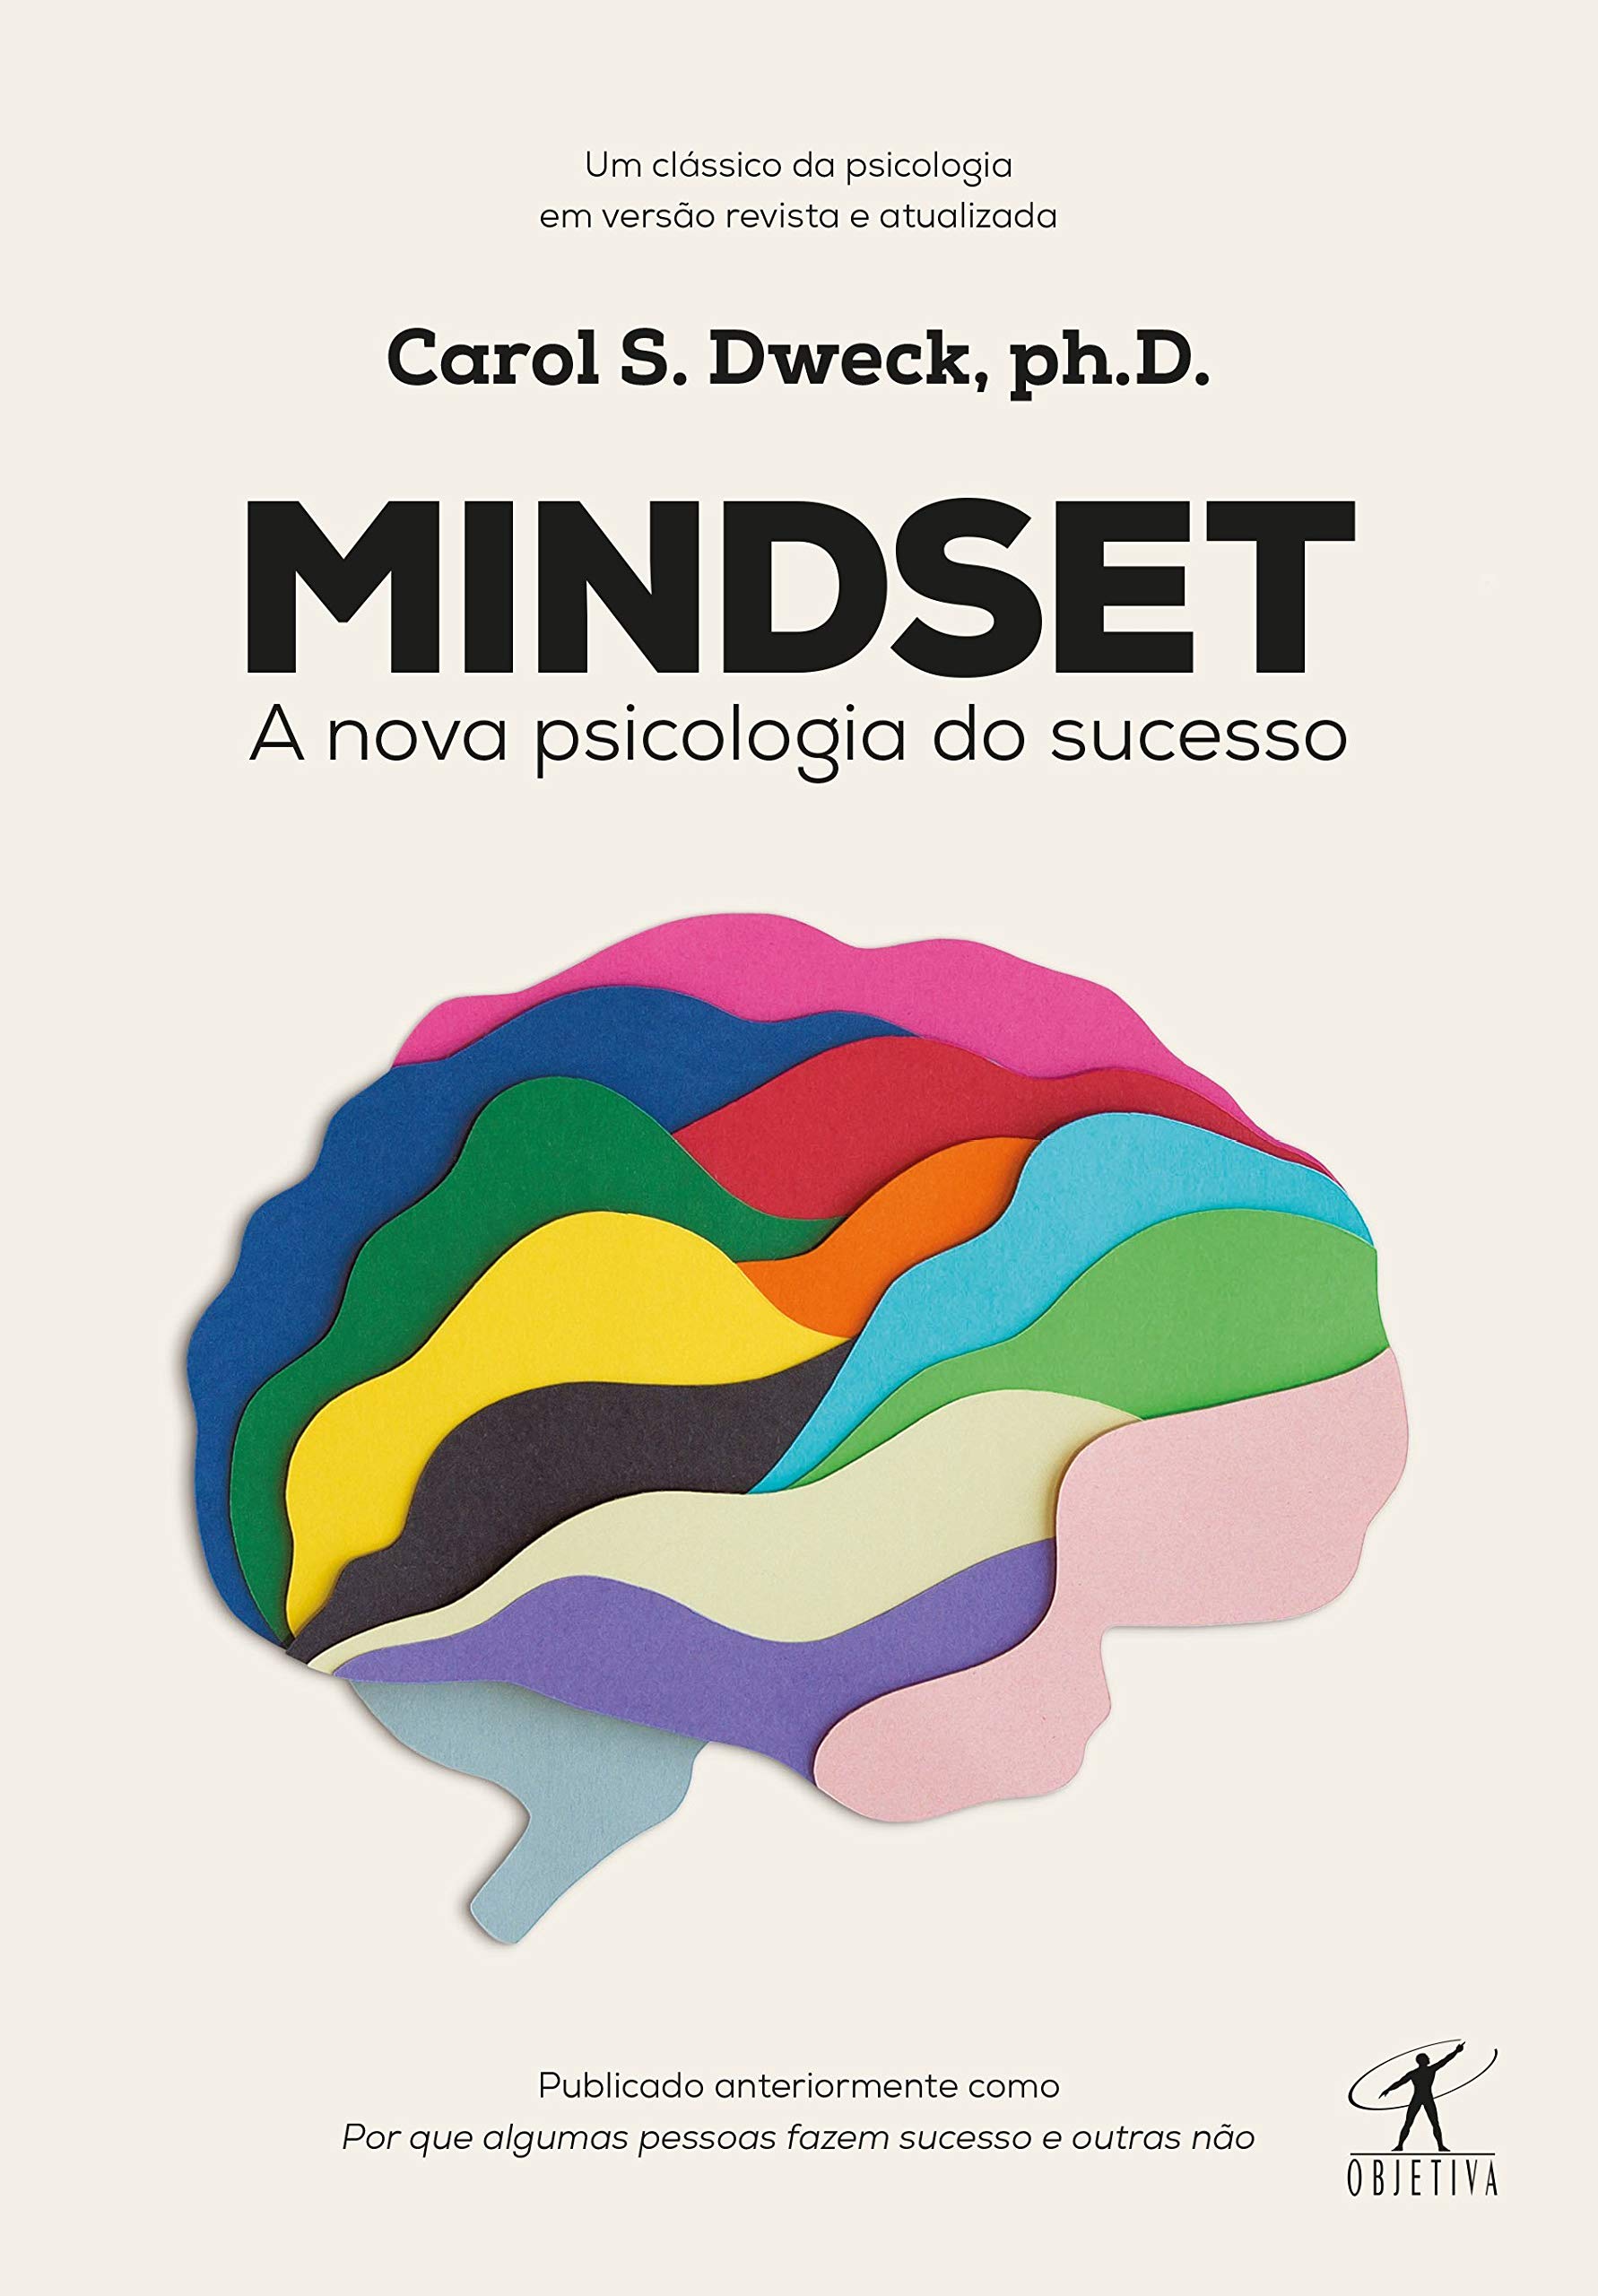 Cover Image for Mindset - A nova psicologia do sucesso